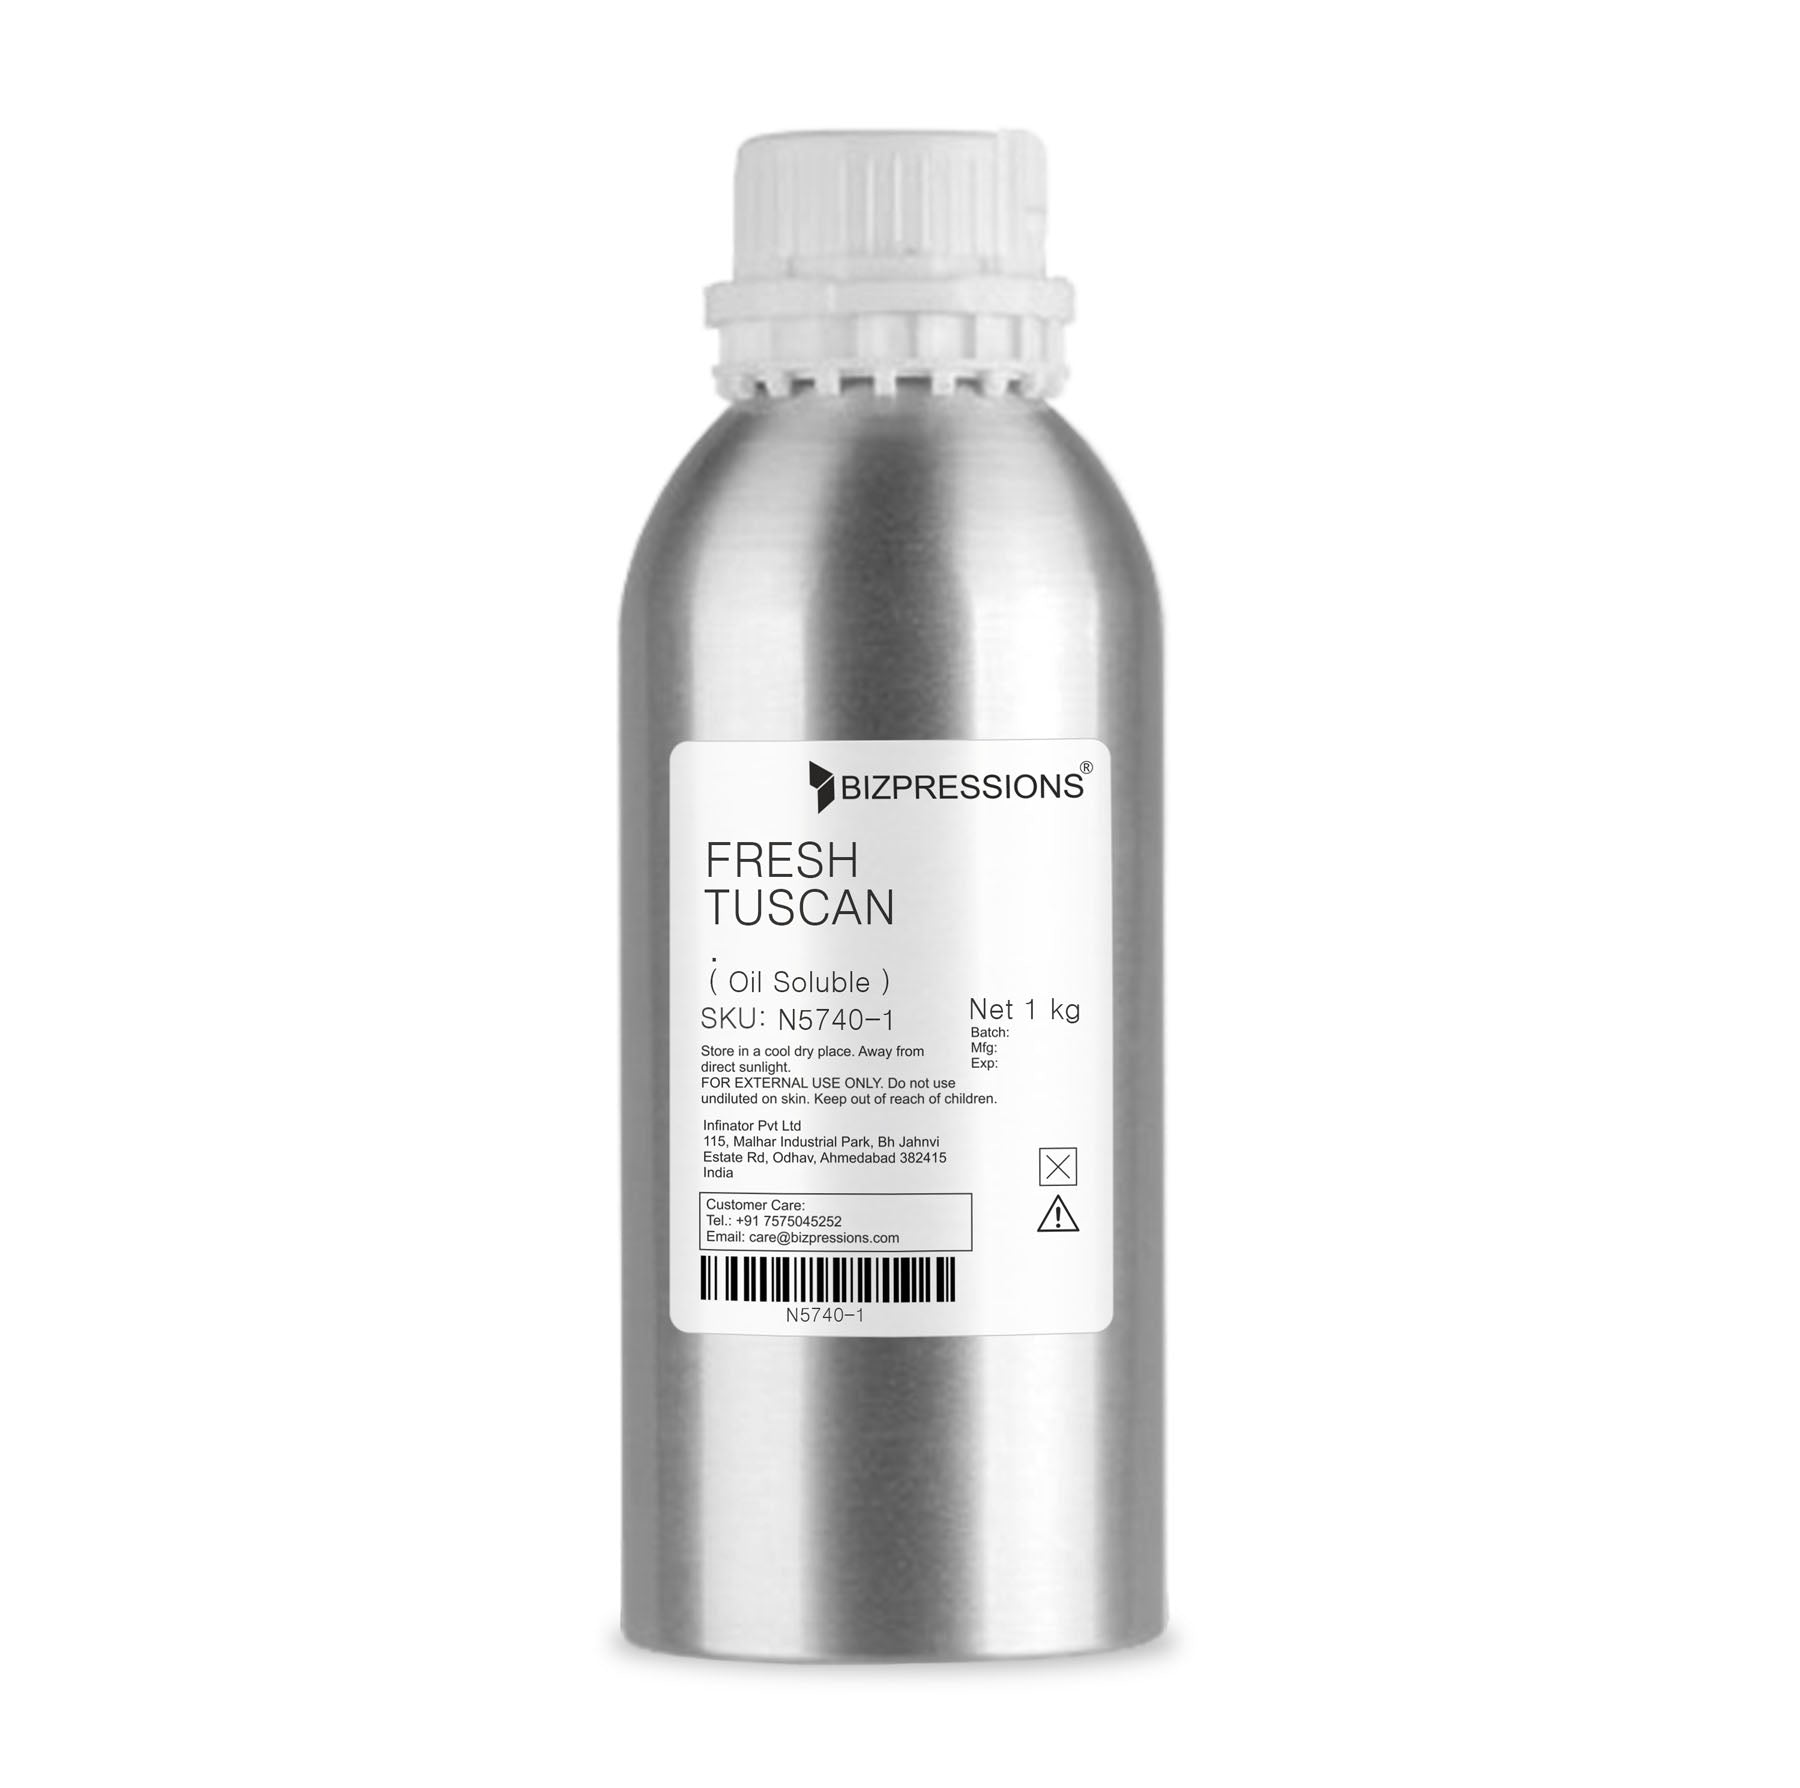 FRESH TUSCAN - Fragrance ( Oil Soluble ) - 1 kg